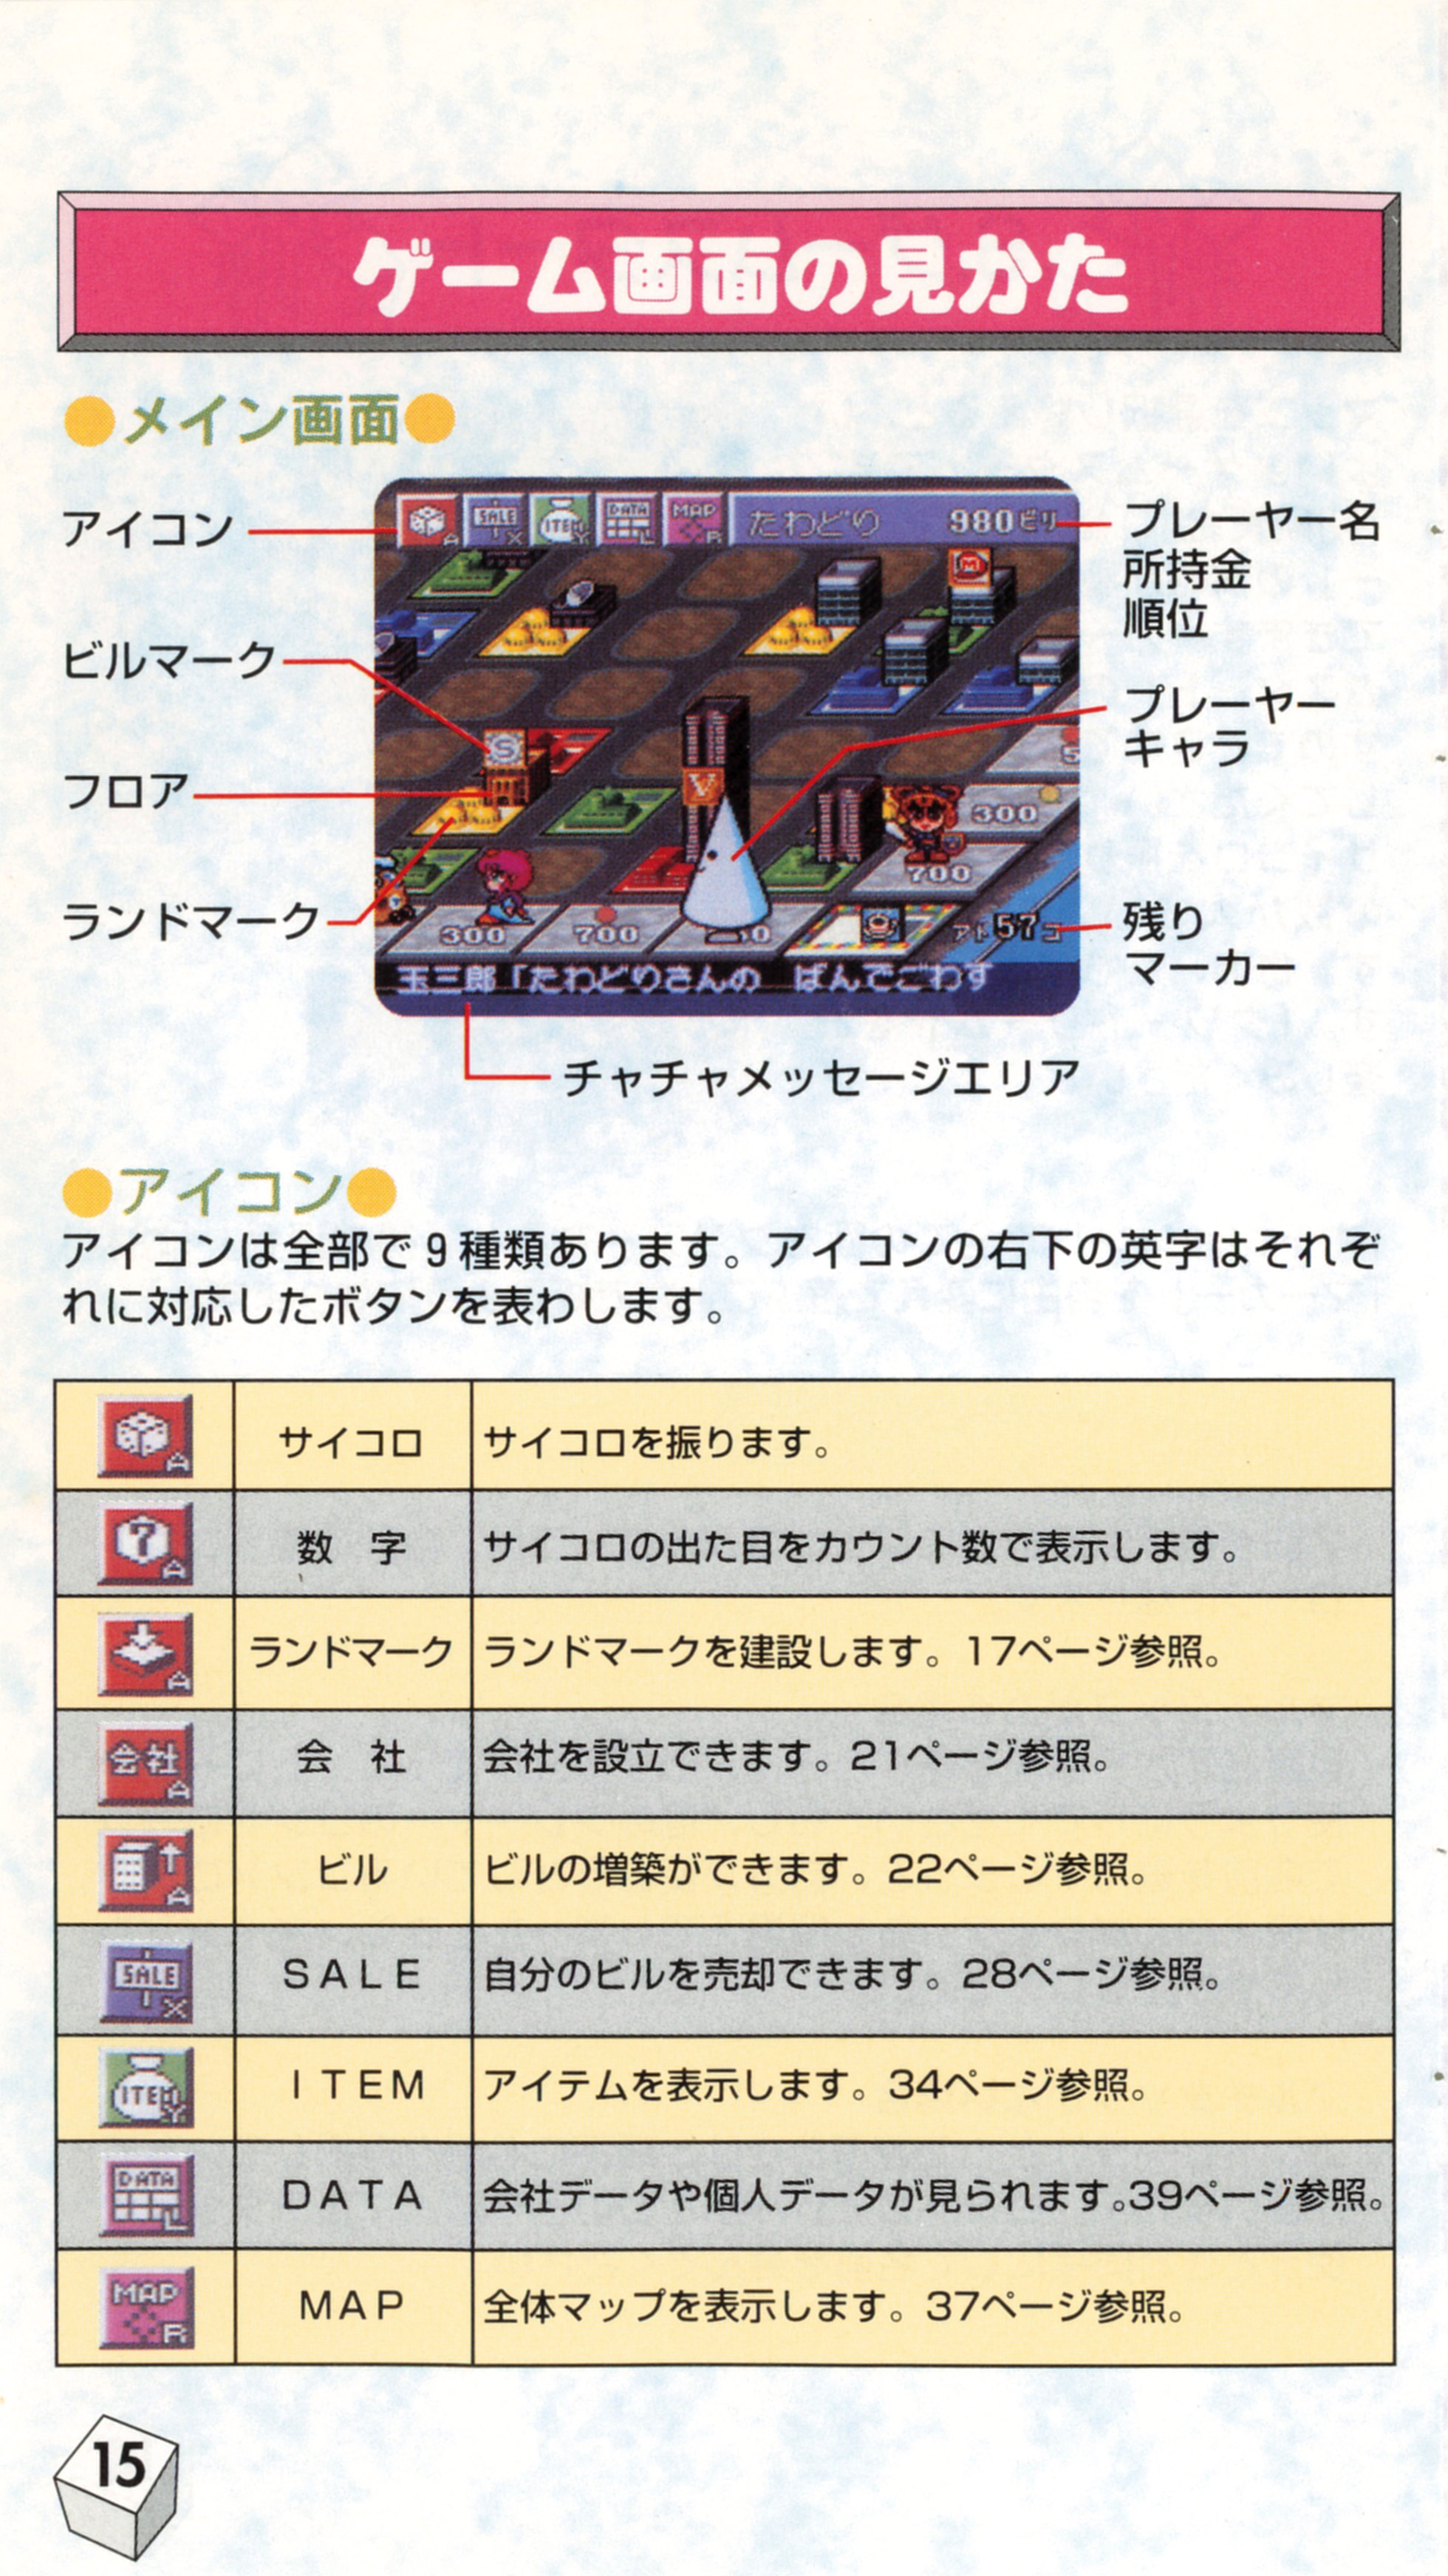 Tower Dream [SHVC-AT9J-JPN] (Super Famicom) - Box, Cart, Manual 